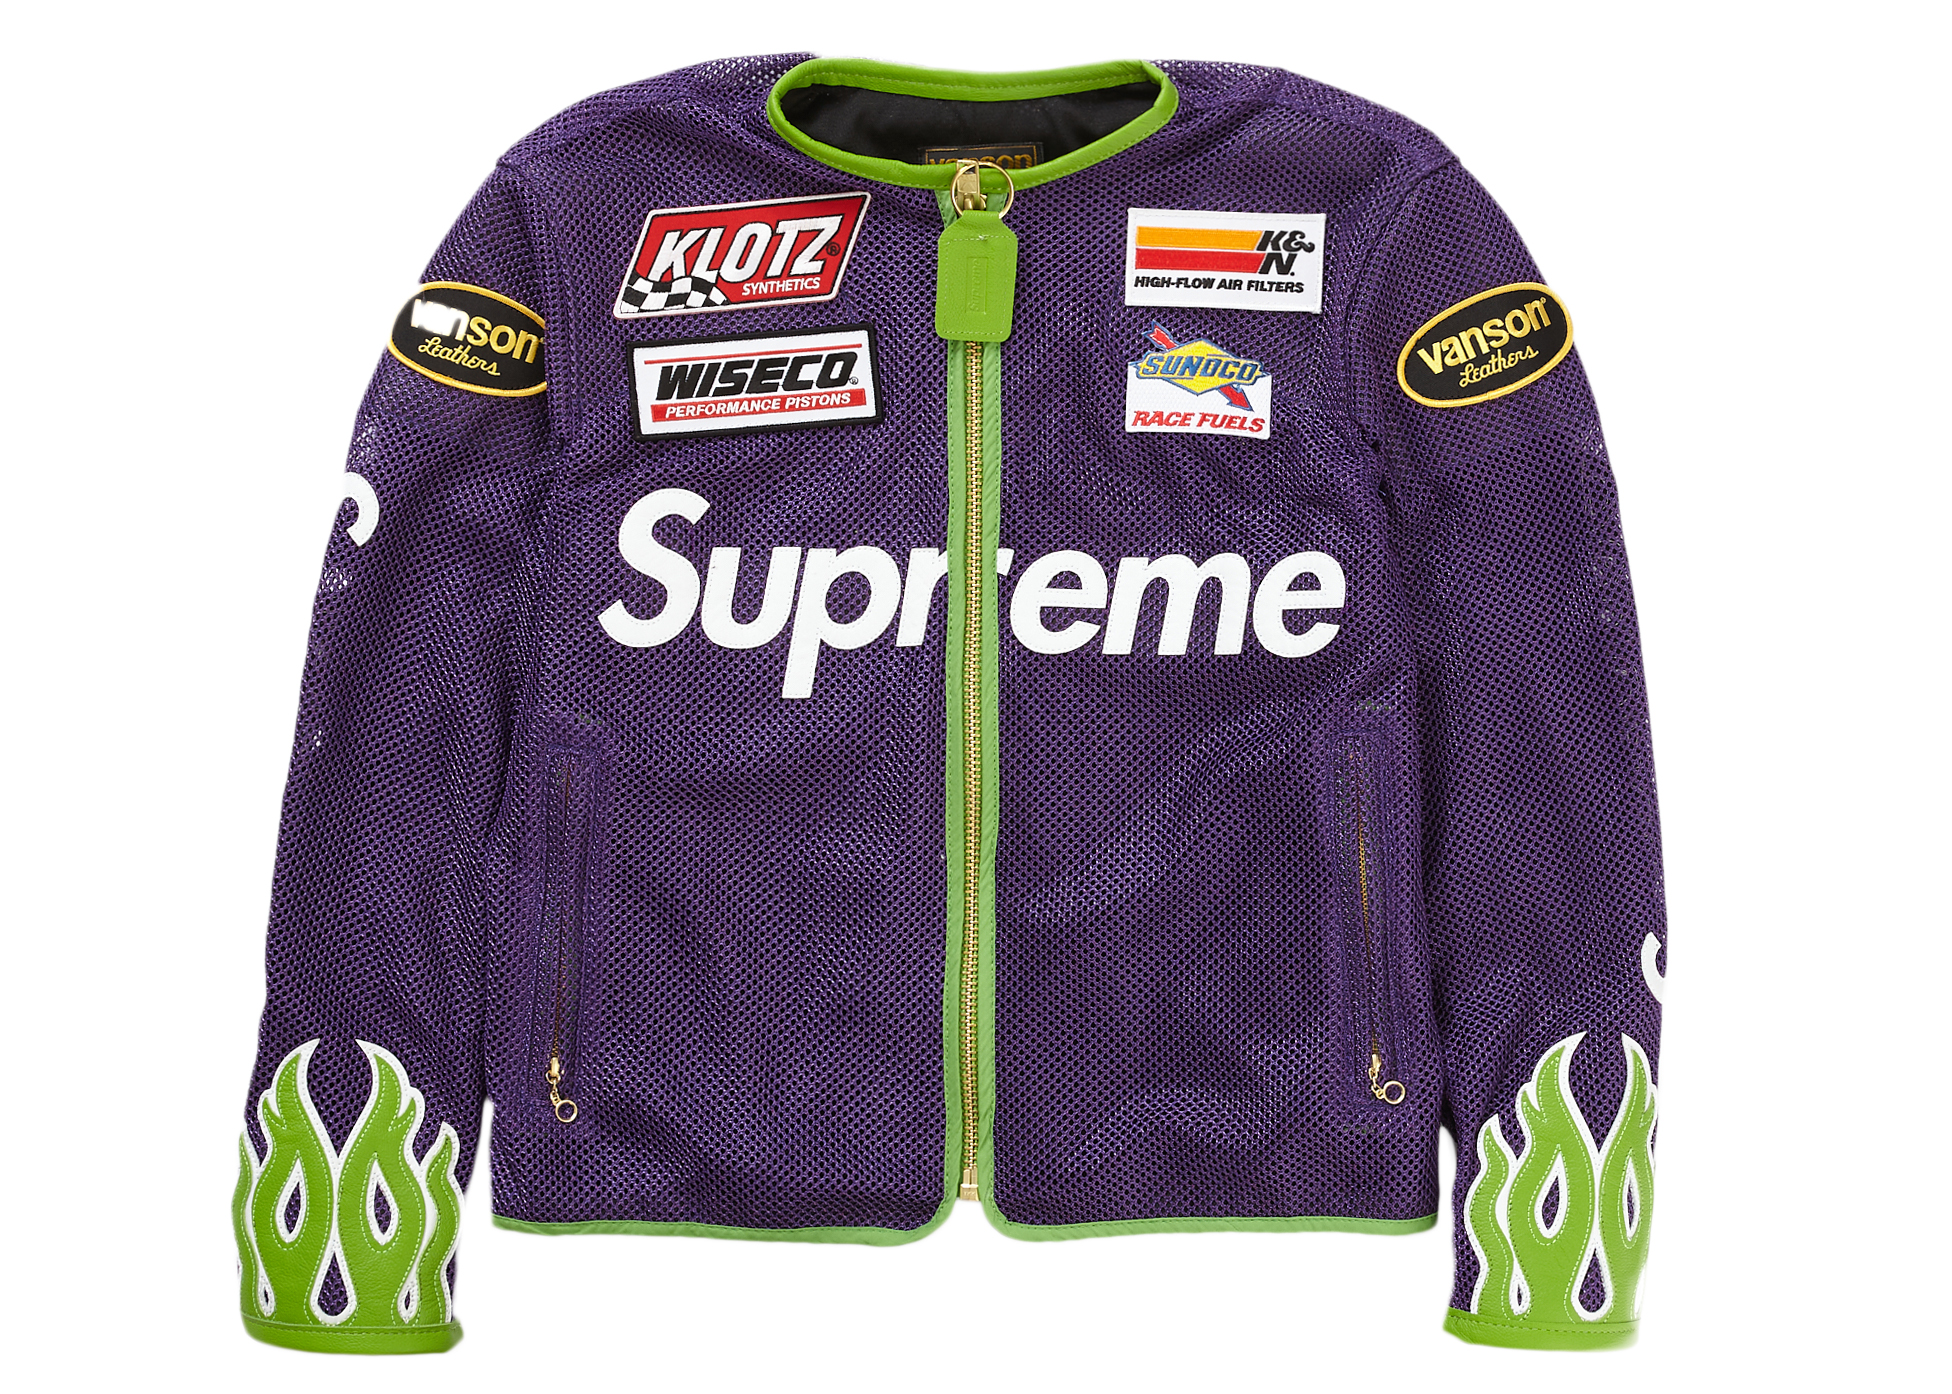 Supreme Vanson Leathers Cordura Mesh Jacket Purple